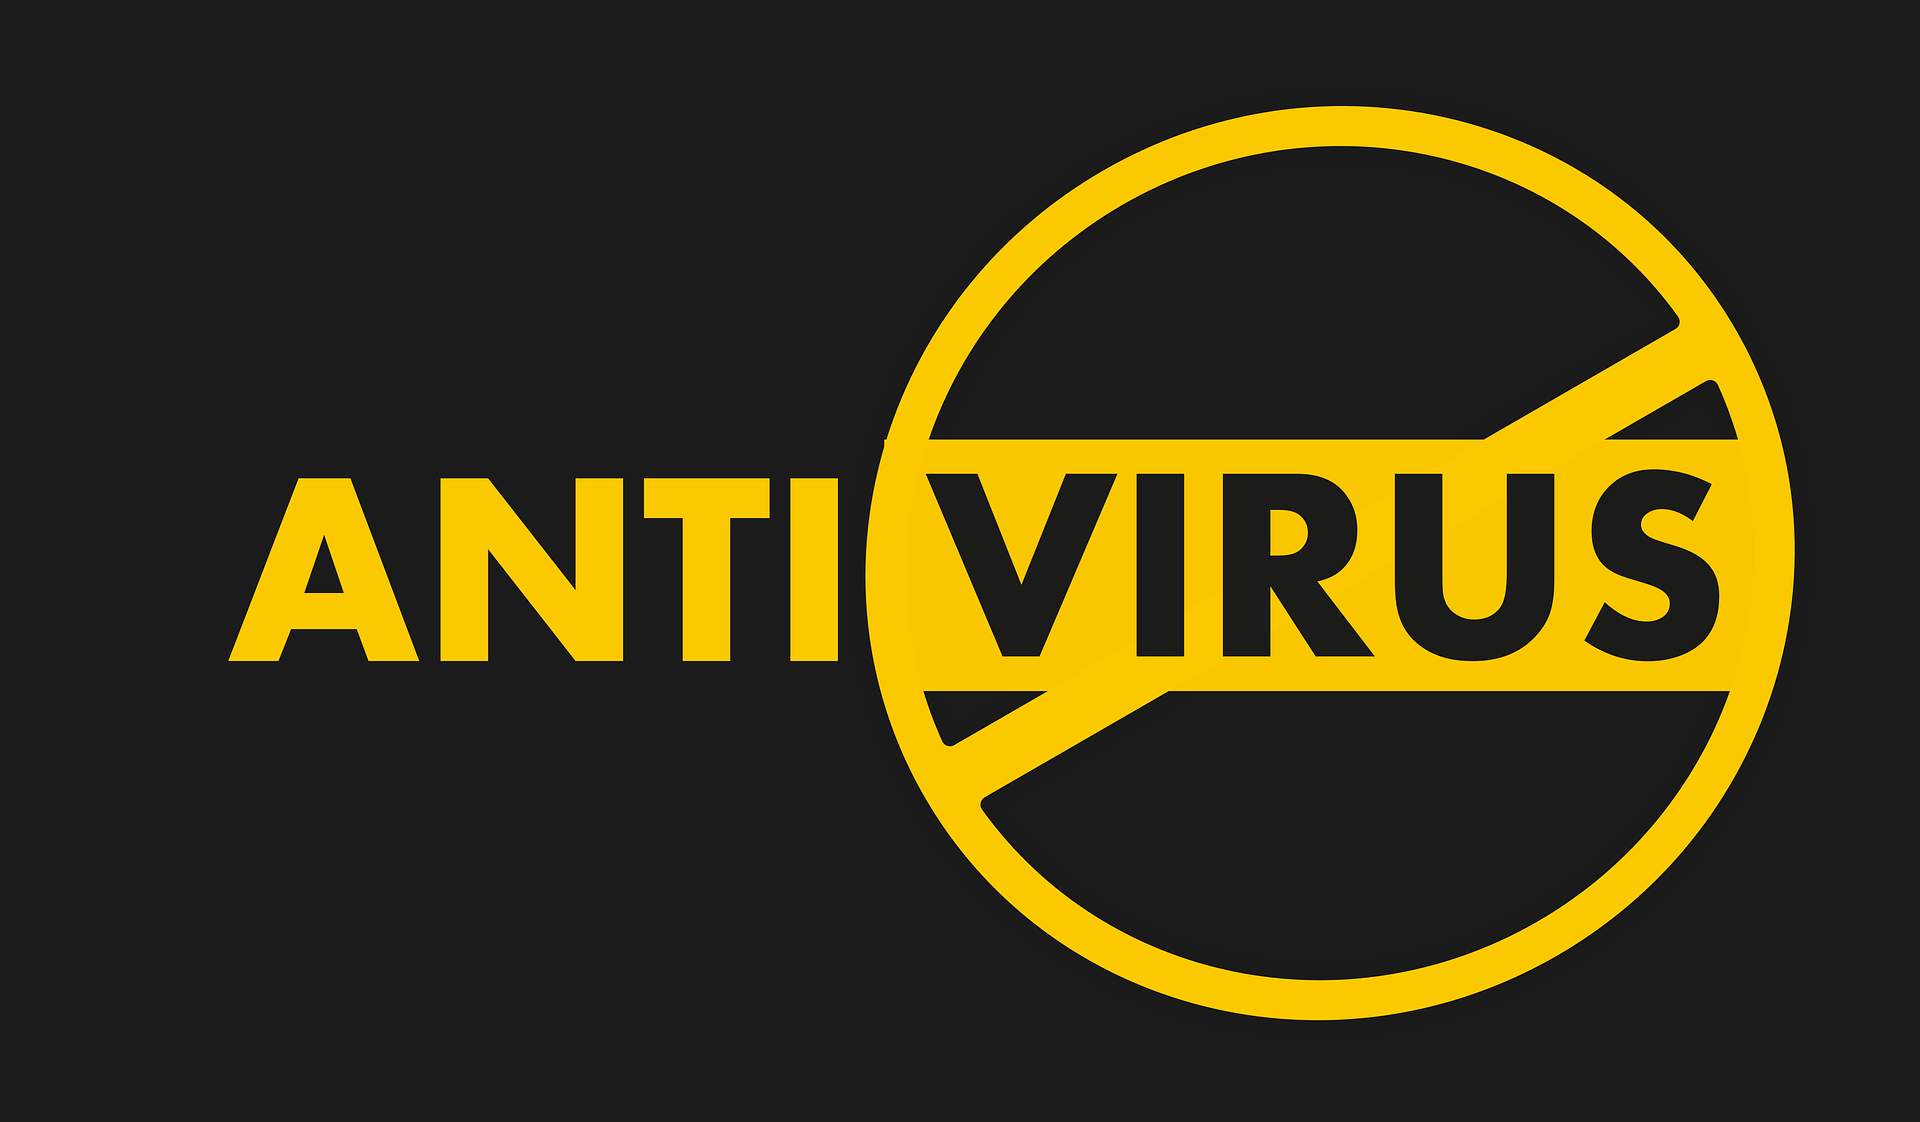 antivirus-1349649_1920.png